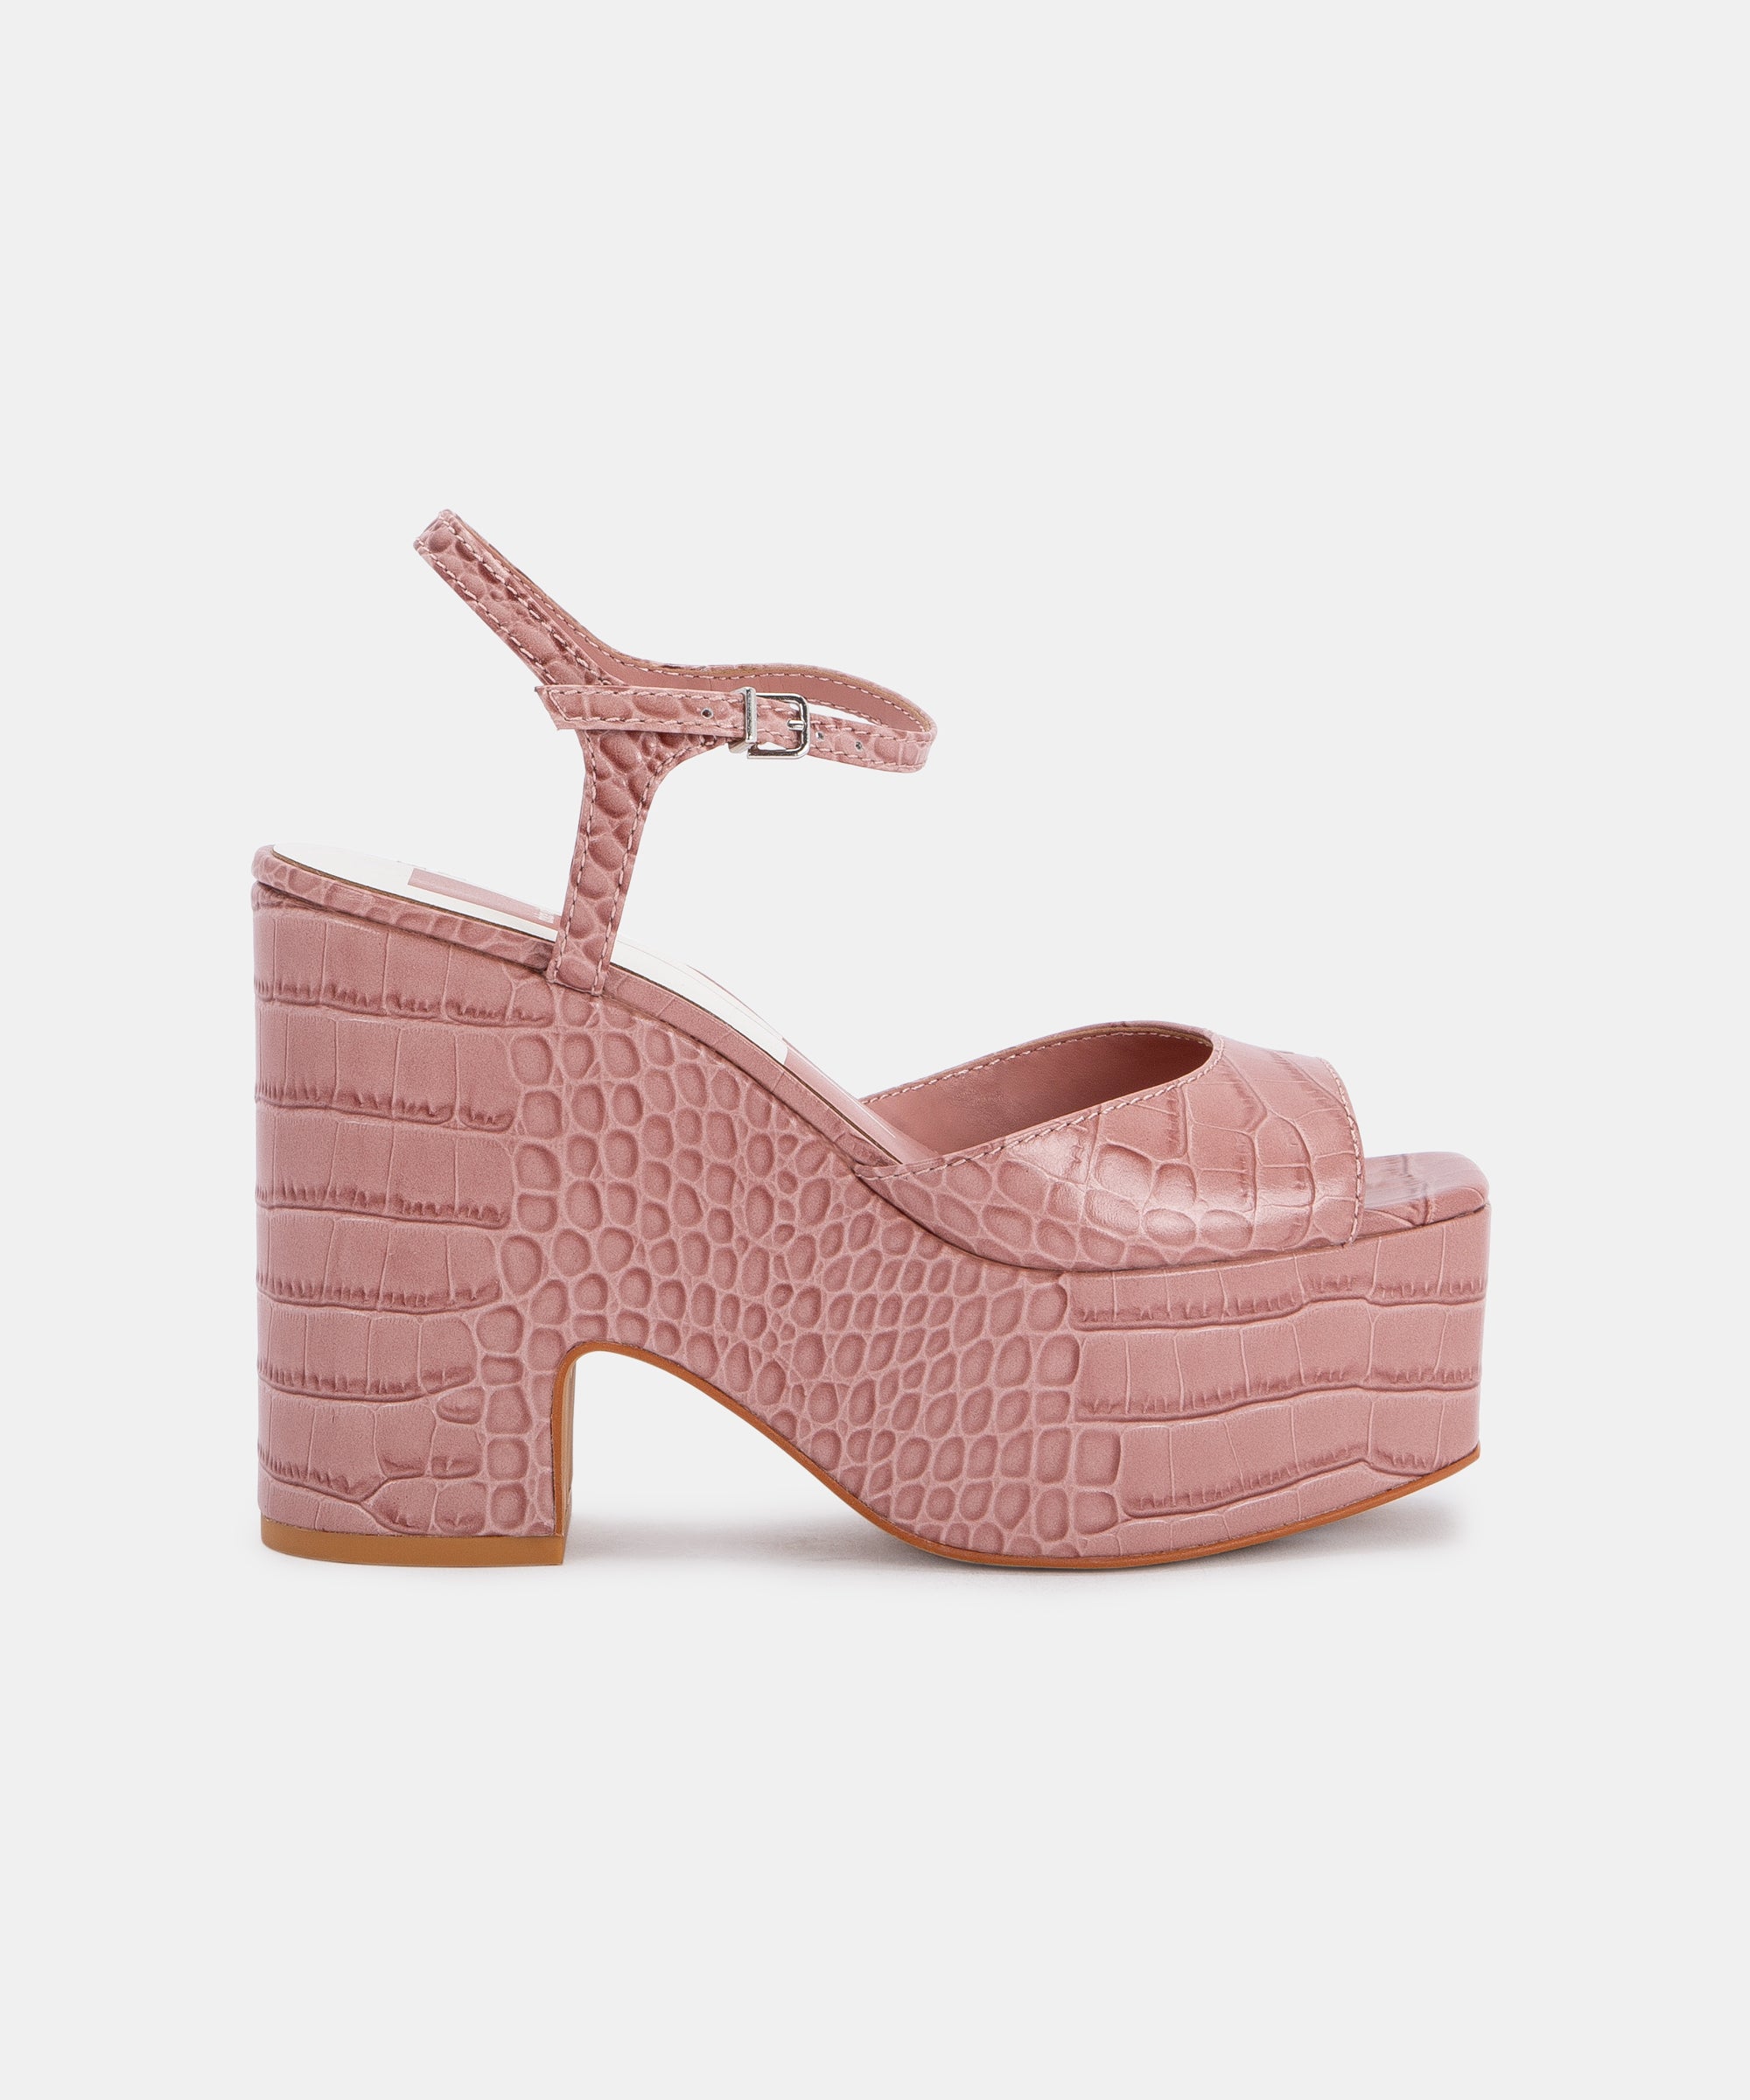 dolce vita platform shoes